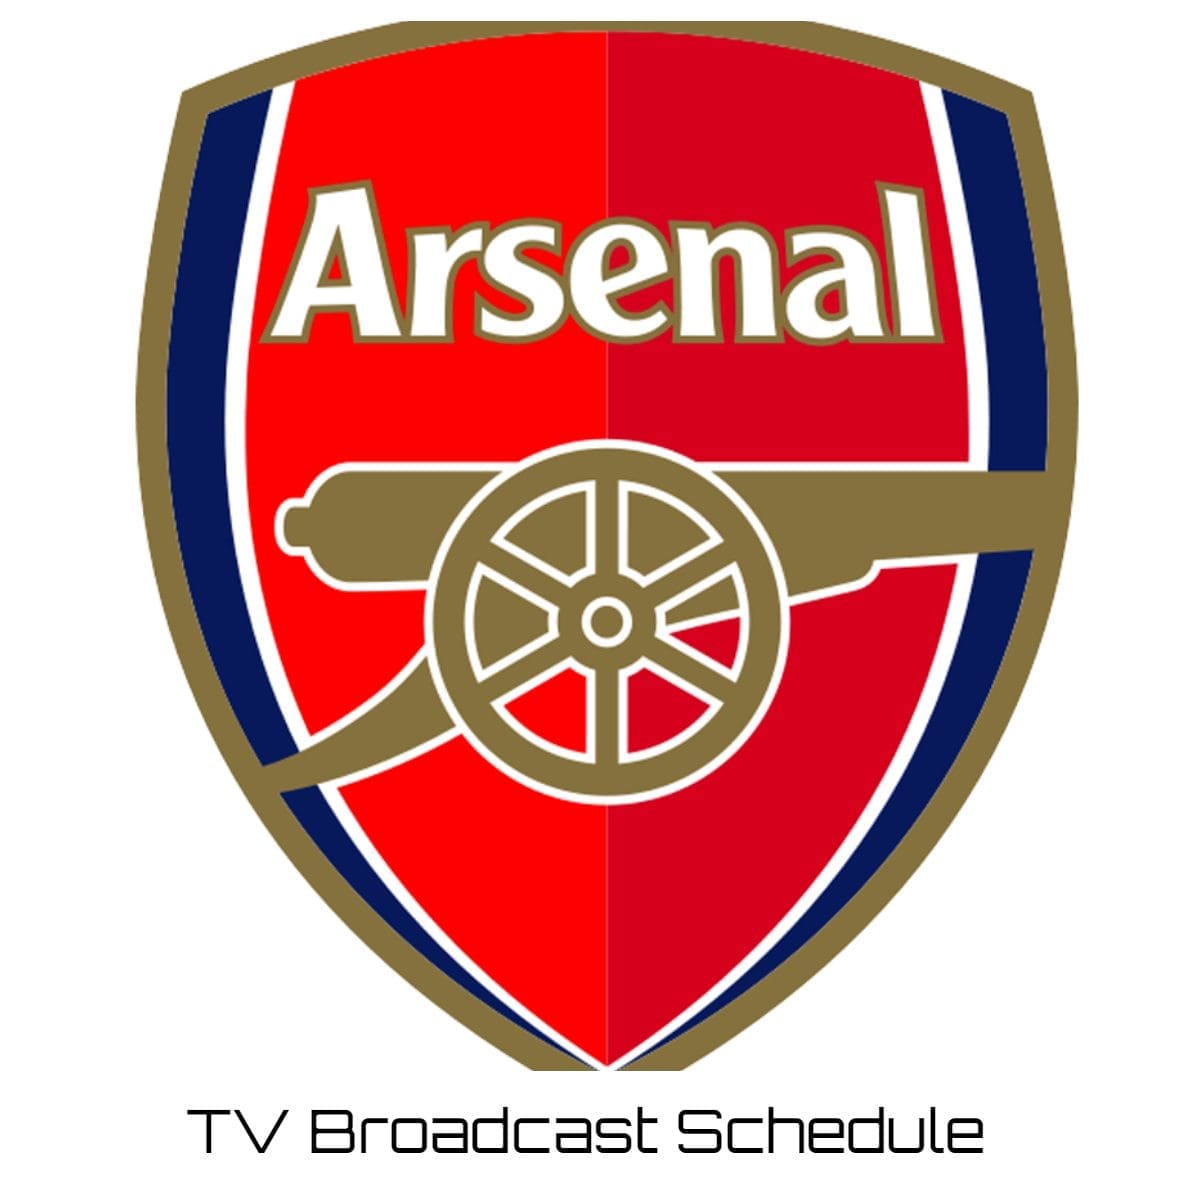 Arsenal TV Broadcast Schedule